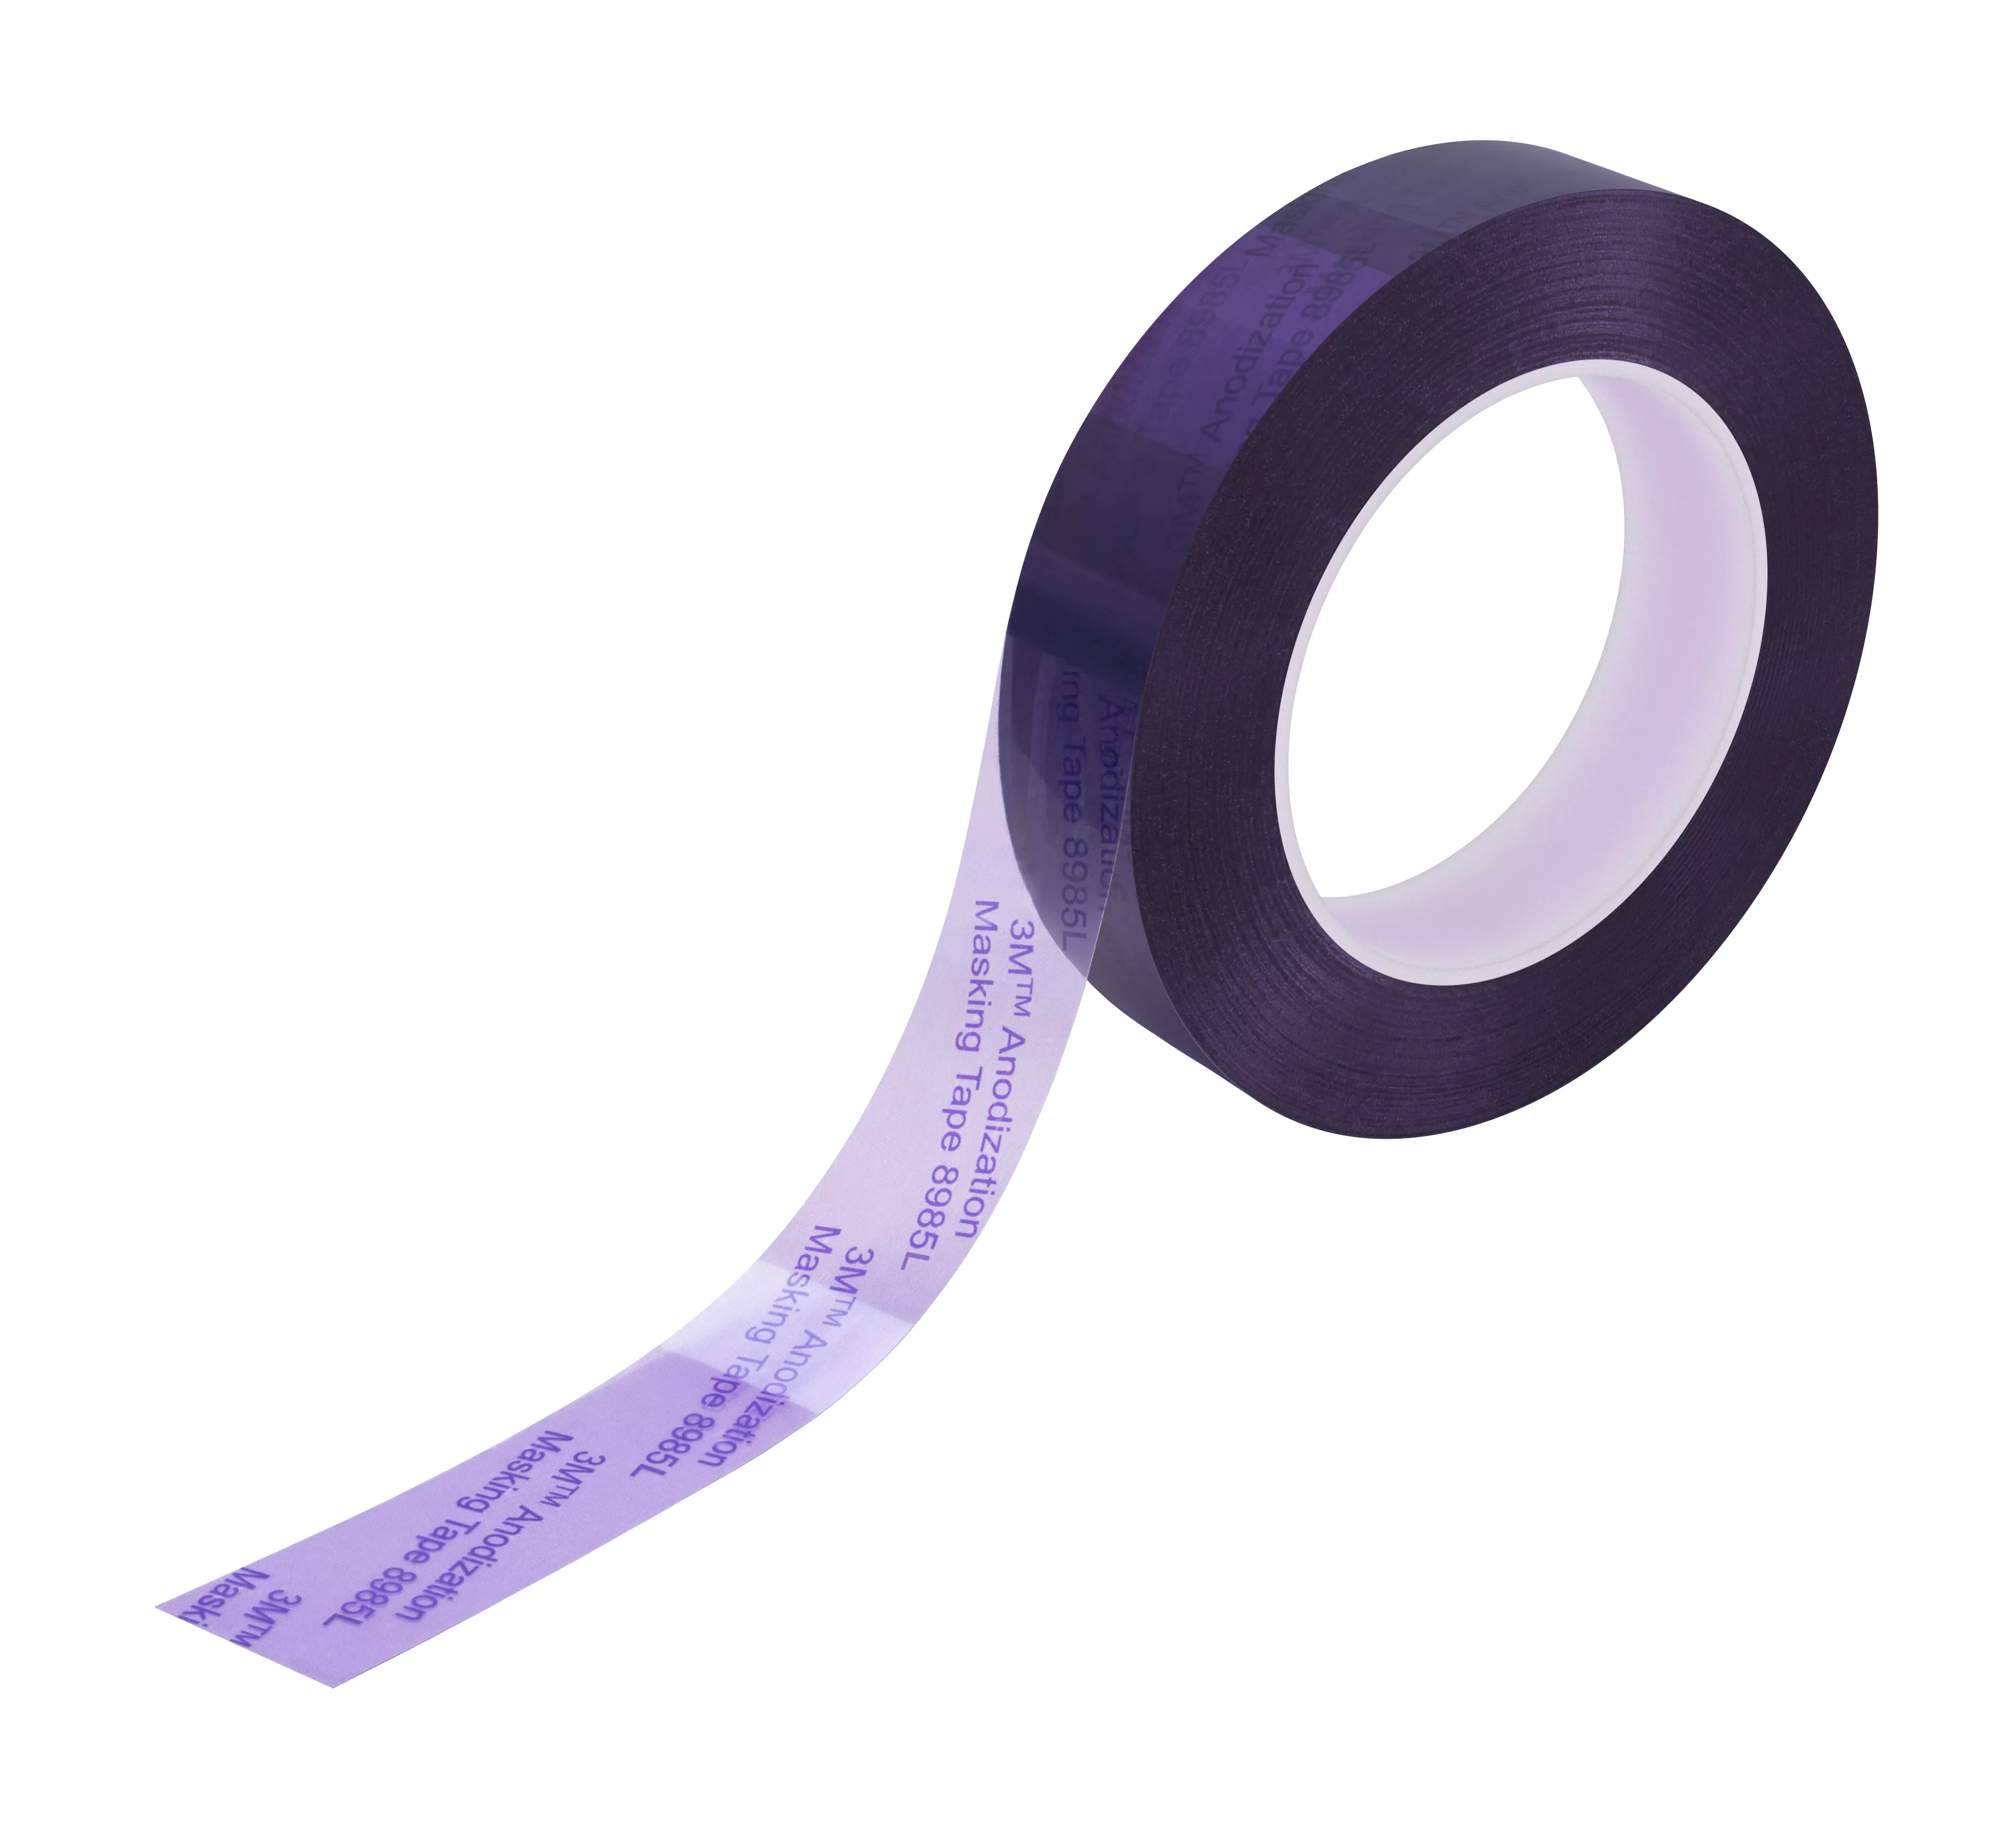 3M™ Anodization Masking Tape 8985L, Purple, 2 in x 72 yd, 24 rolls per
case